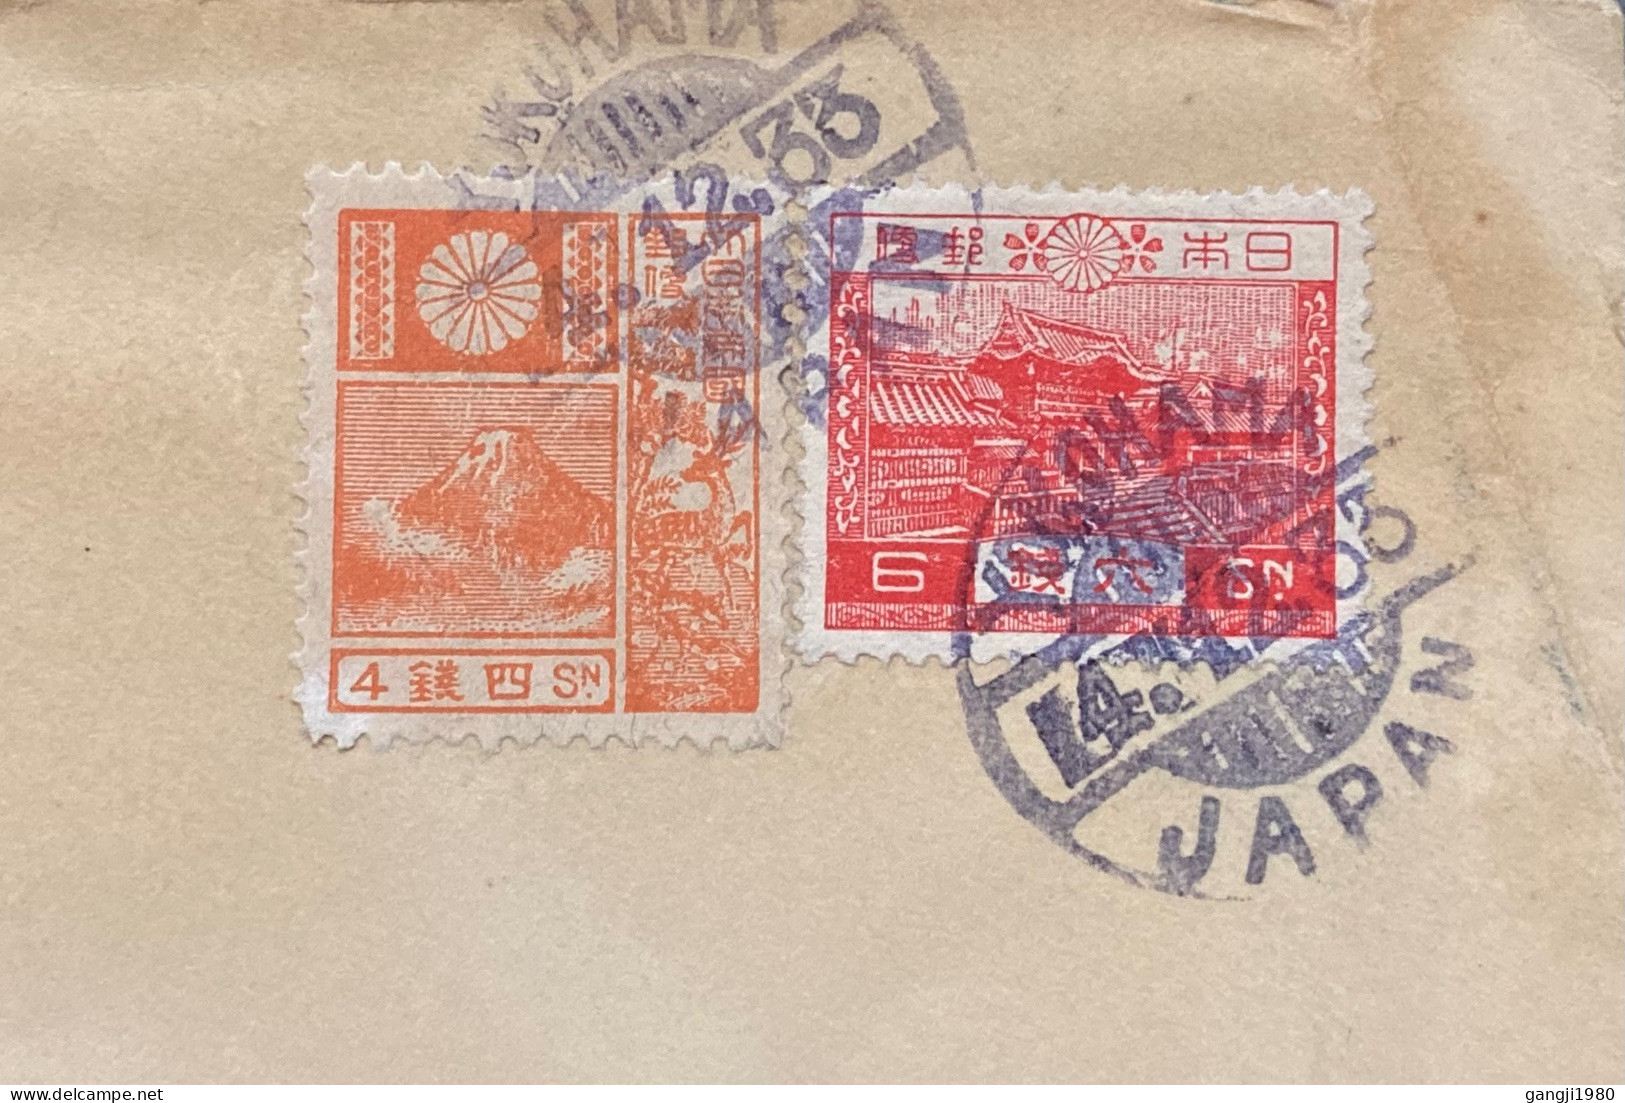 JAPAN 1933, COVER USED TO USA, 1922 MT, FUJI. & DEER, 1926 TIMER GATE STAMP, YOKOHAMA CITY CANCEL. - Cartas & Documentos